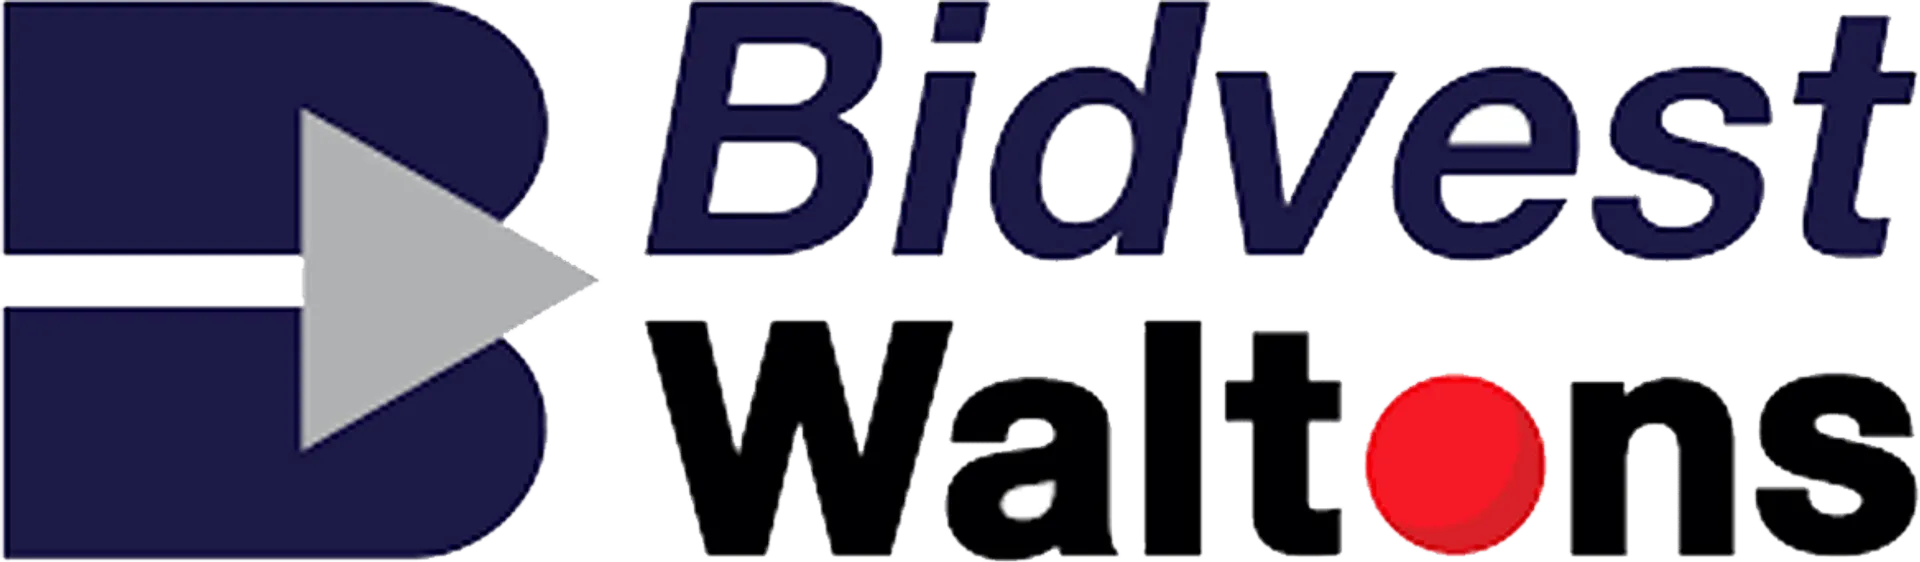 BIDVEST WALTONS logo